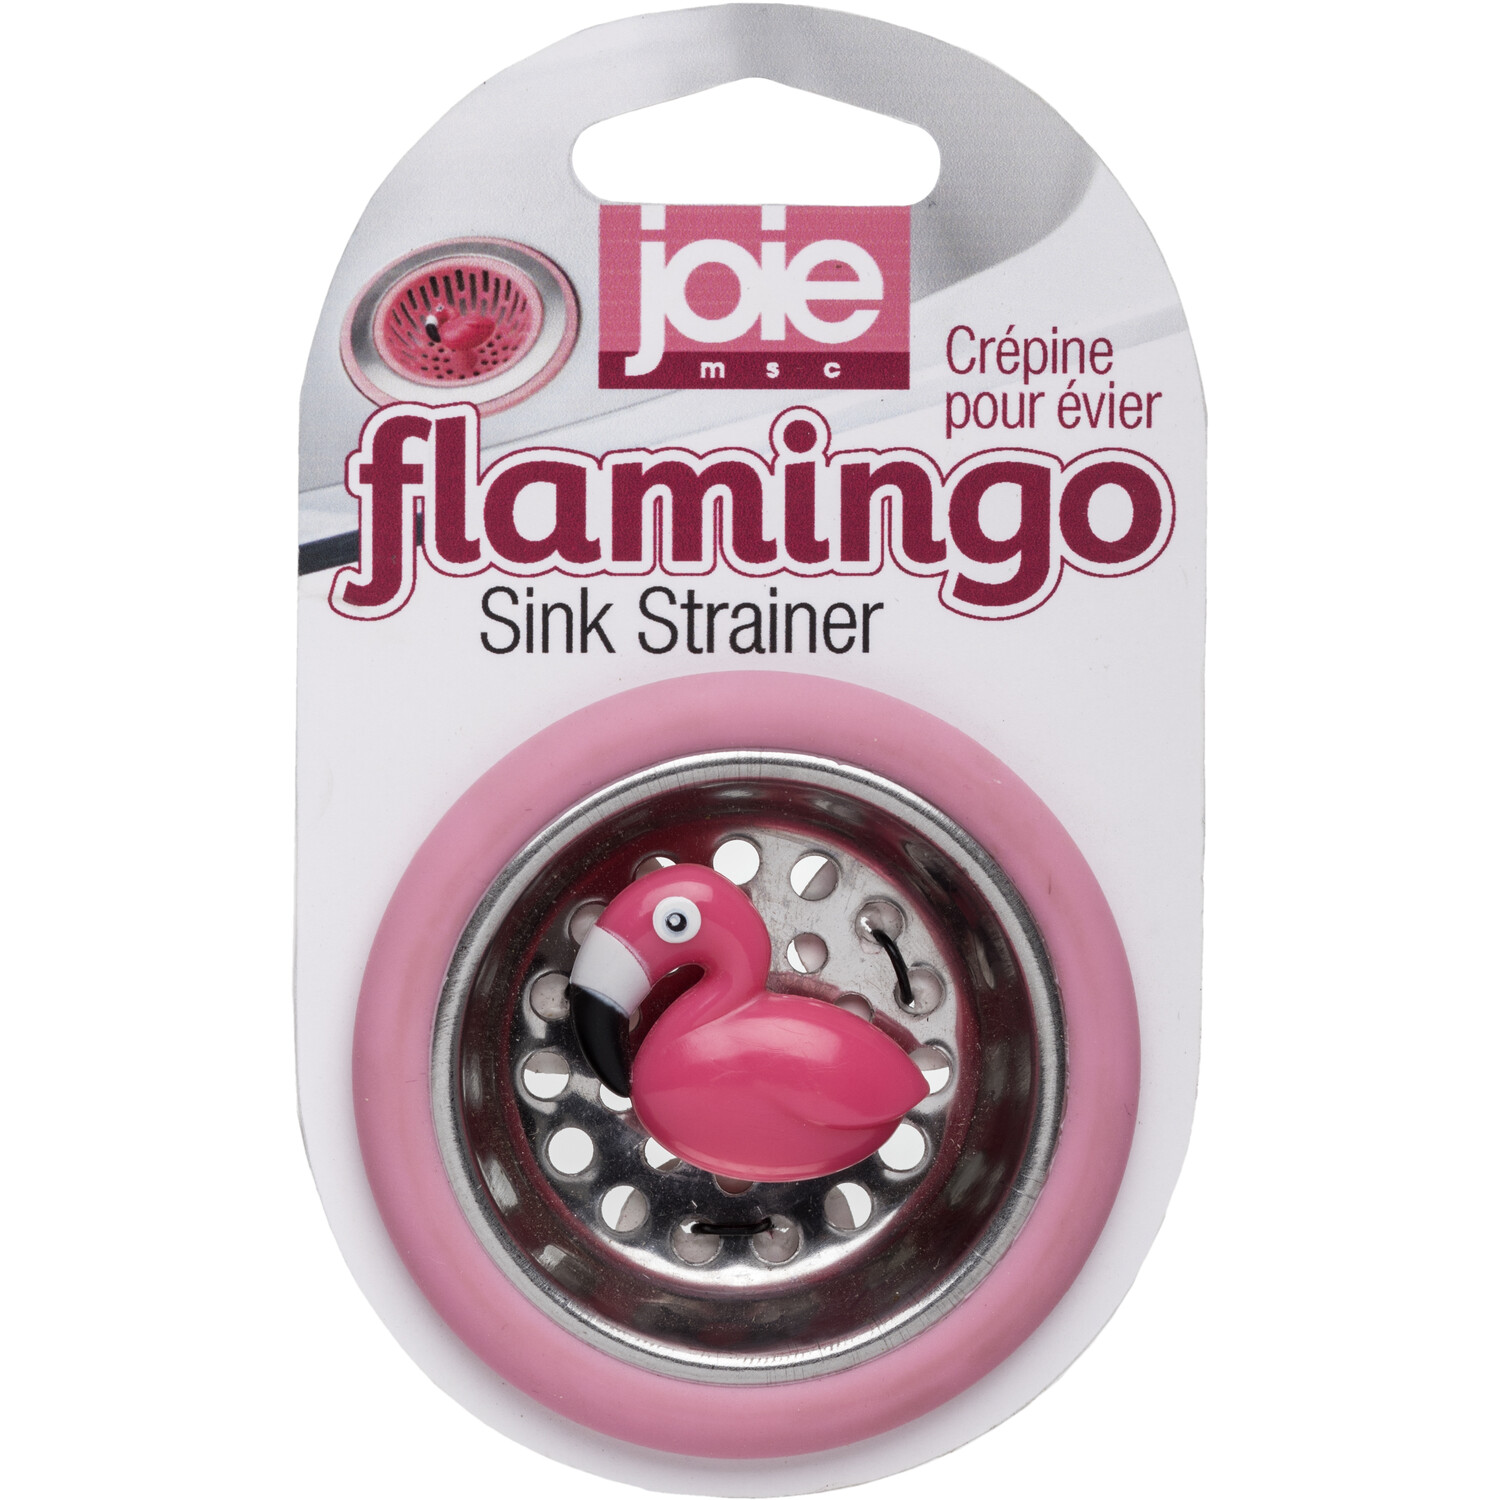 Joie Flamingo Pink Sink Strainer Image 1